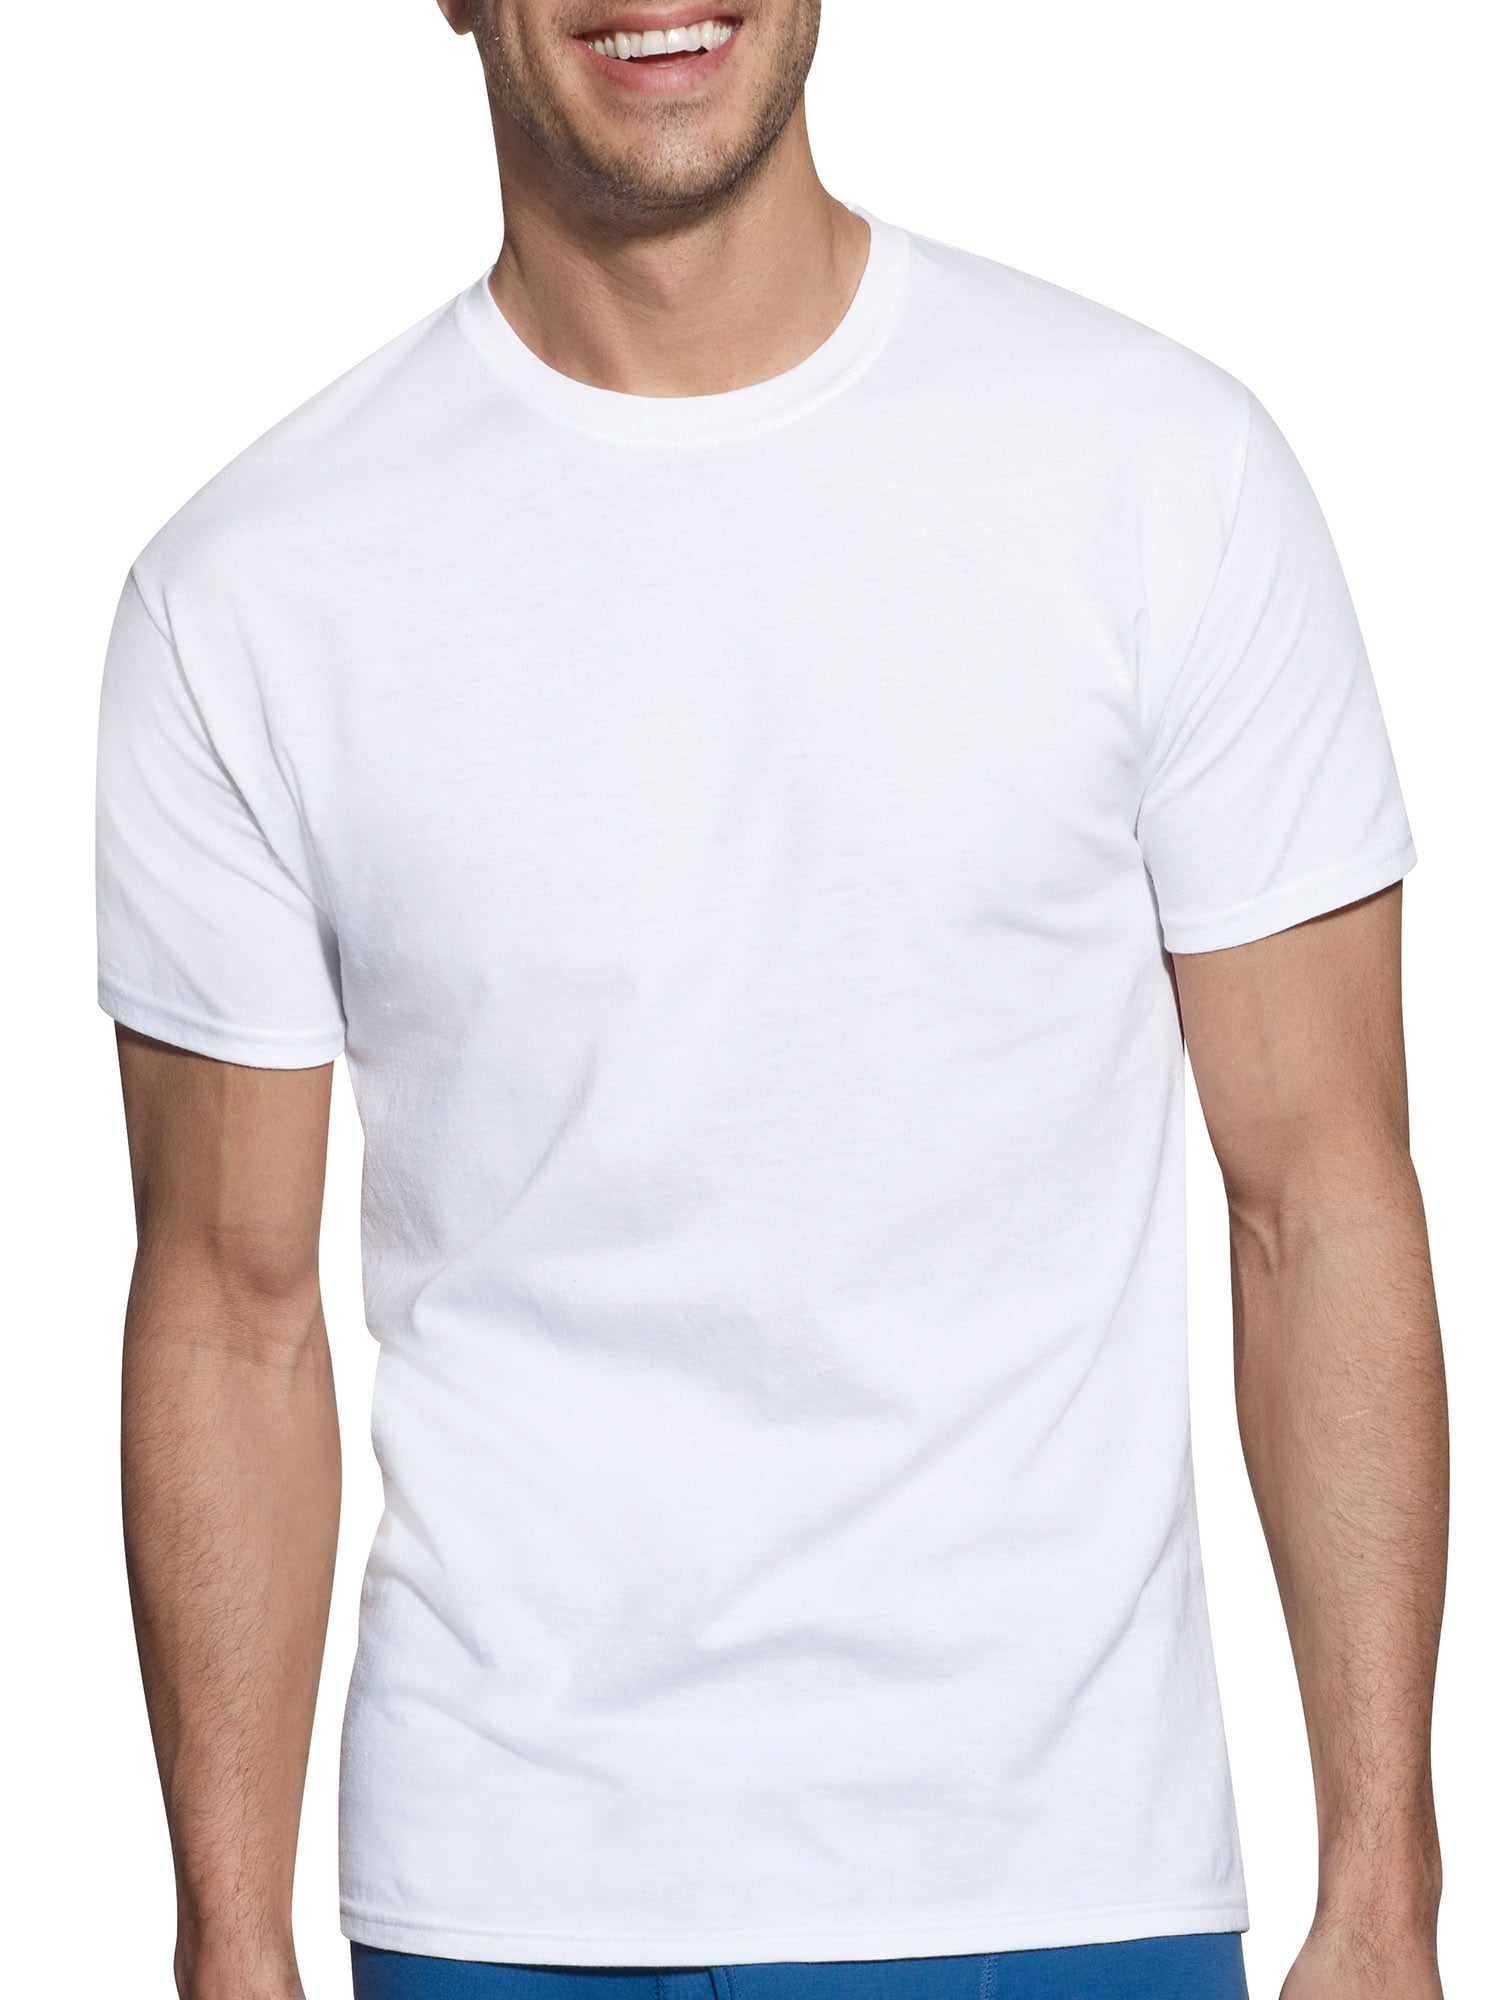 Hanes - Hanes SUPER VALUE 10 PACK White Crew ComfortSoft T-Shirts